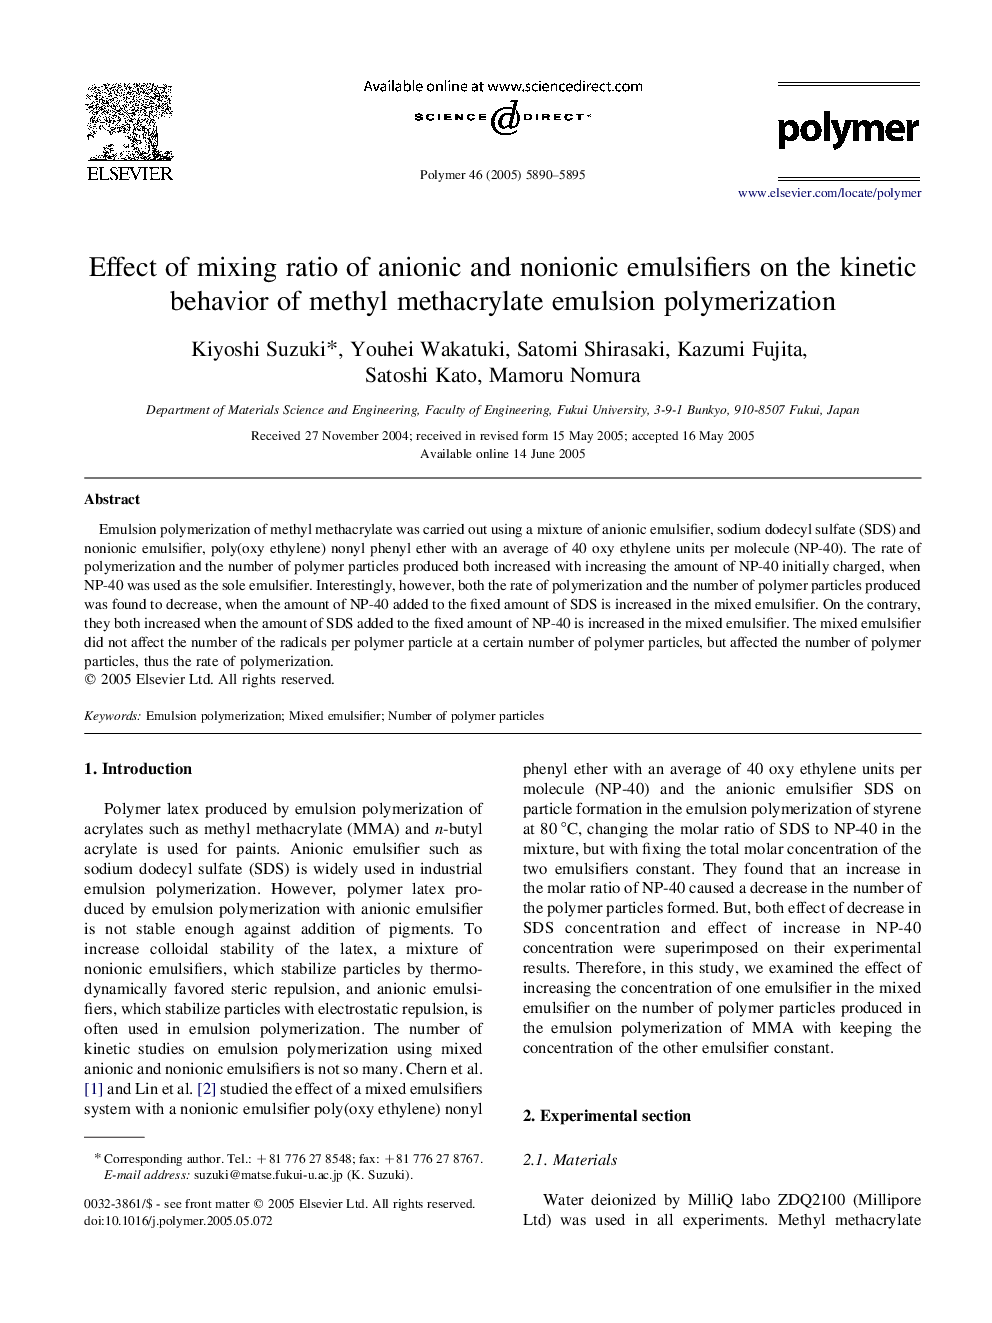 Effect of mixing ratio of anionic and nonionic emulsifiers on the kinetic behavior of methyl methacrylate emulsion polymerization